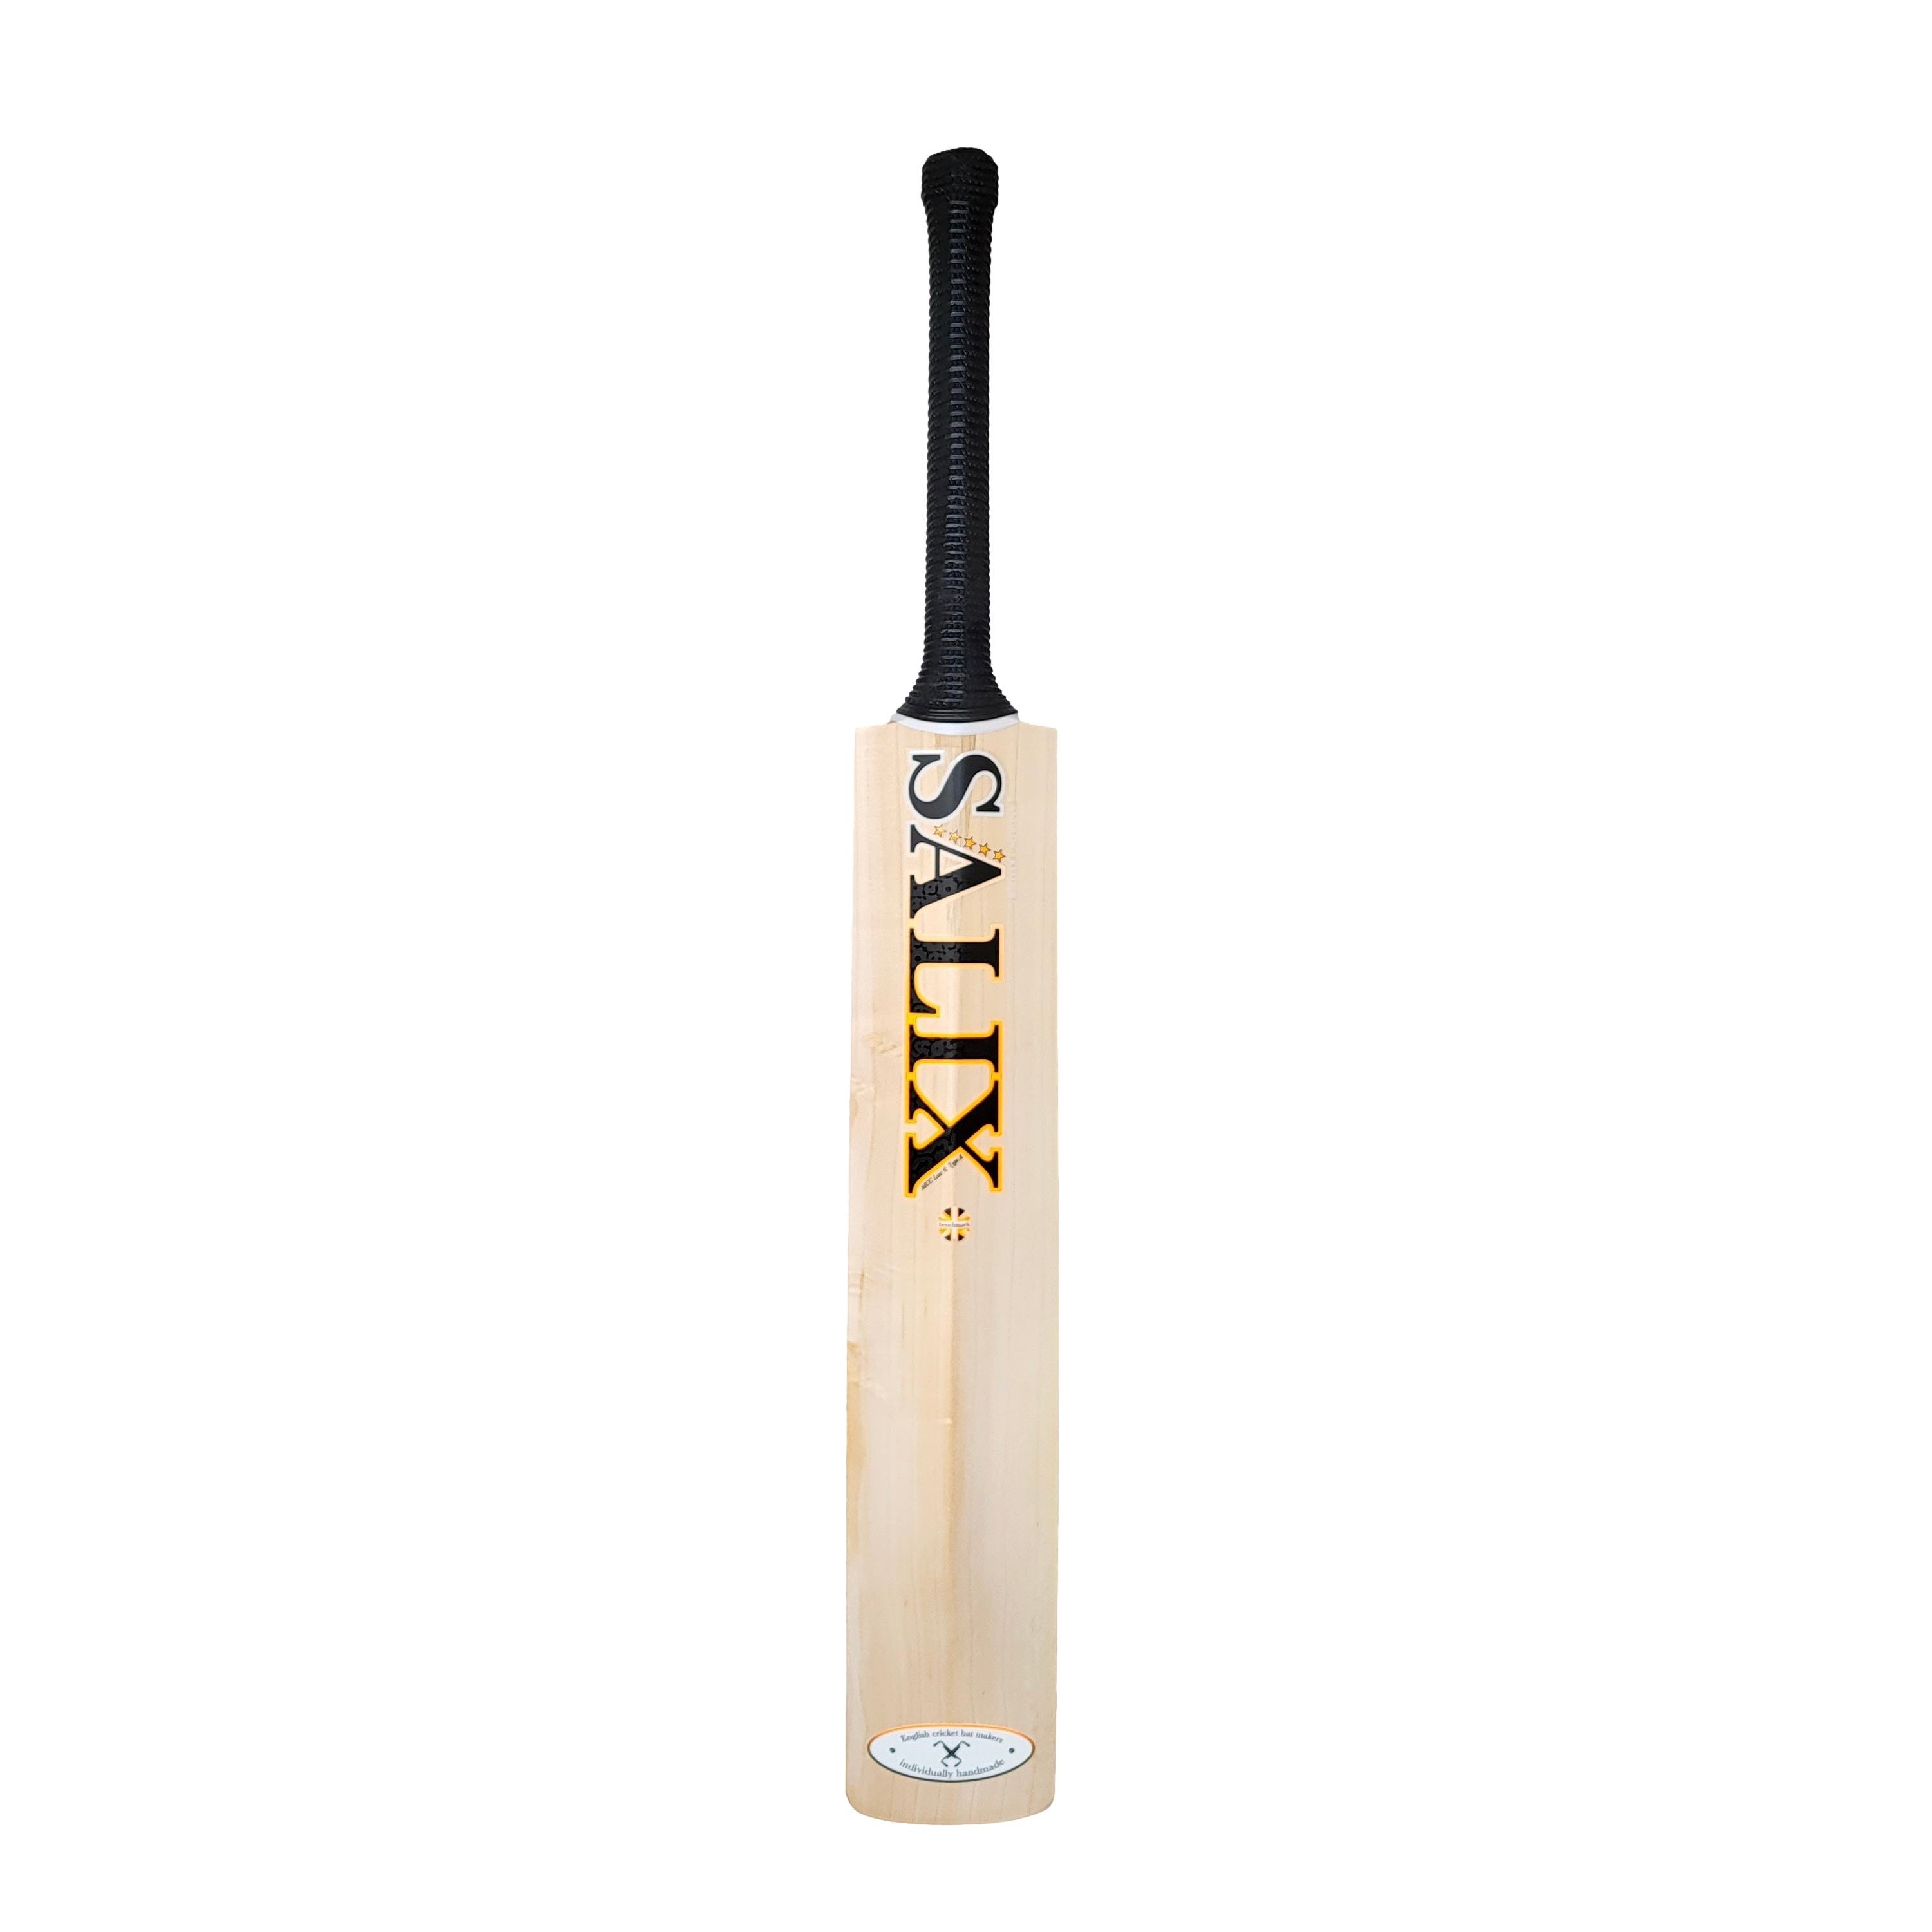 Salix AJK Select Cricket Bat - The Cricket Store